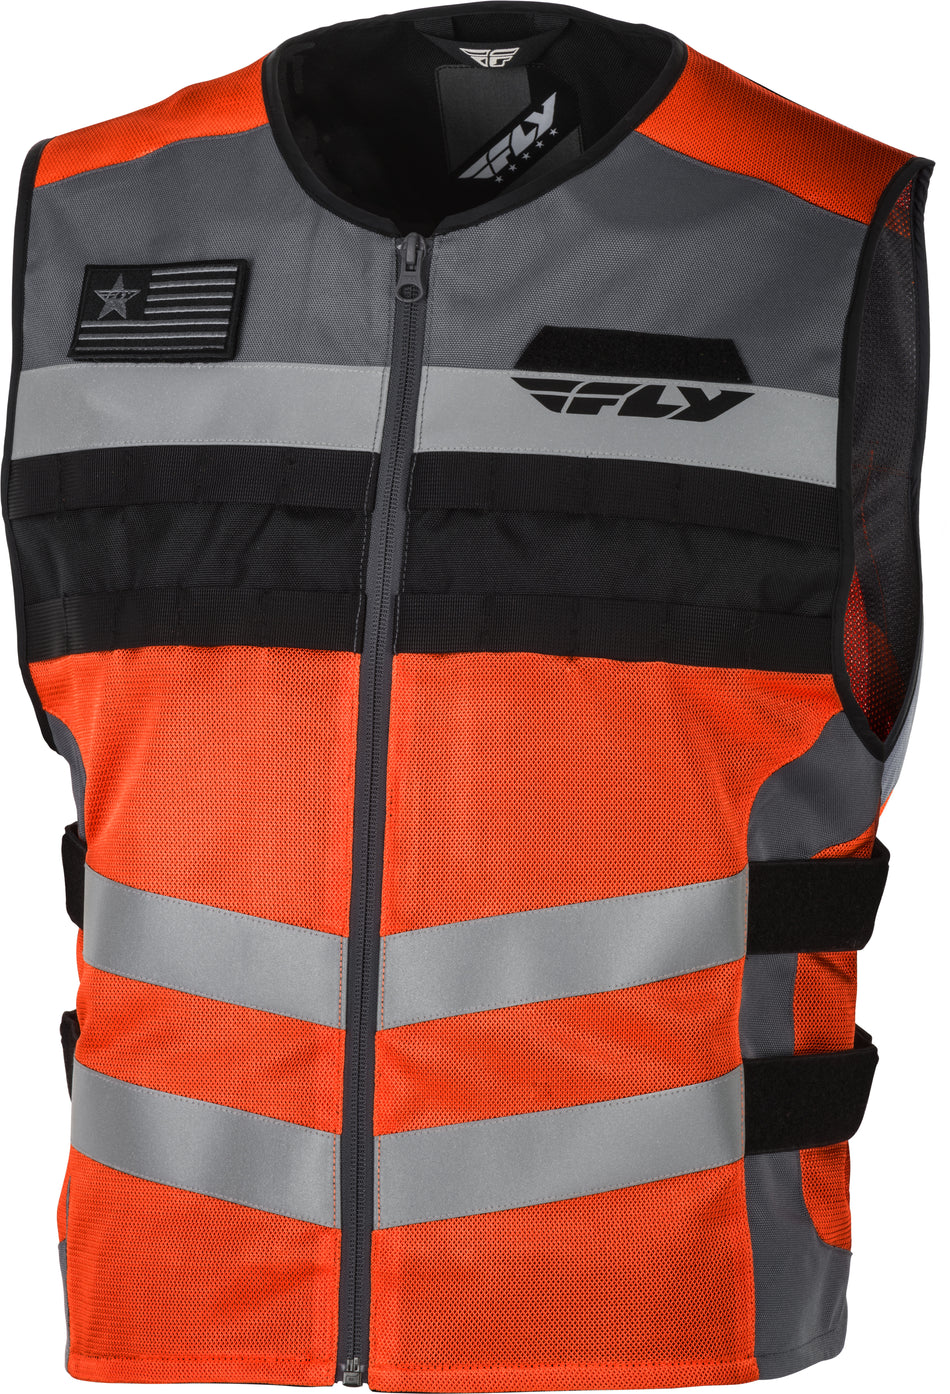 FLY RACING Fast-Pass Vest Neon Orange Lg/Xl #6179 478-6002~5